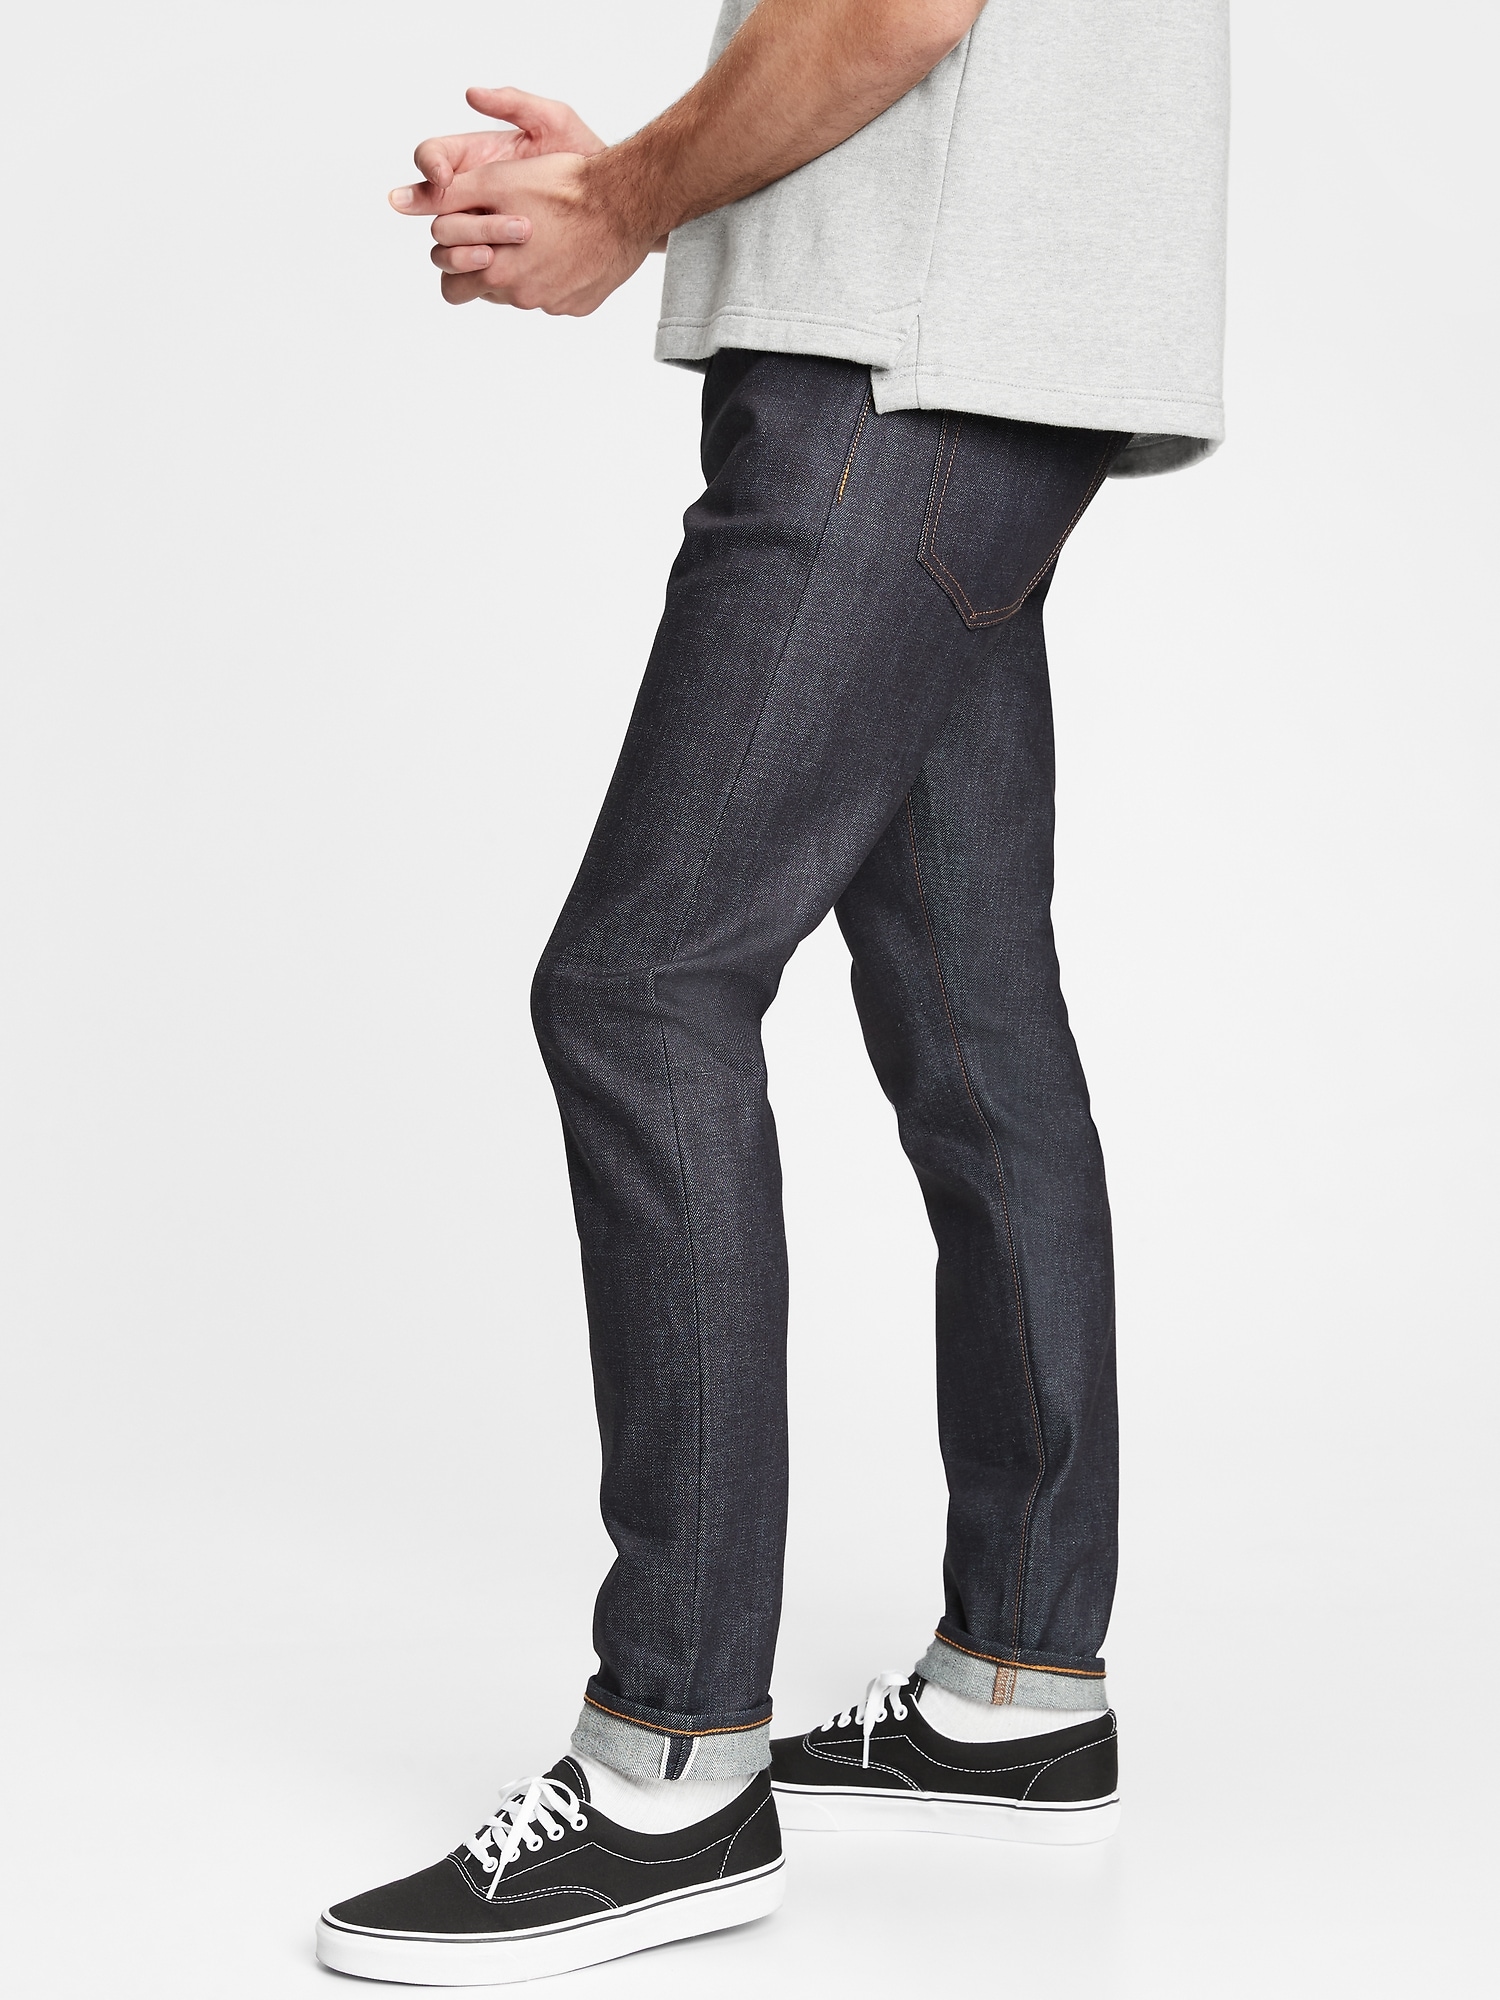 Selvedge Skinny Jeans With Gapflex | Gap